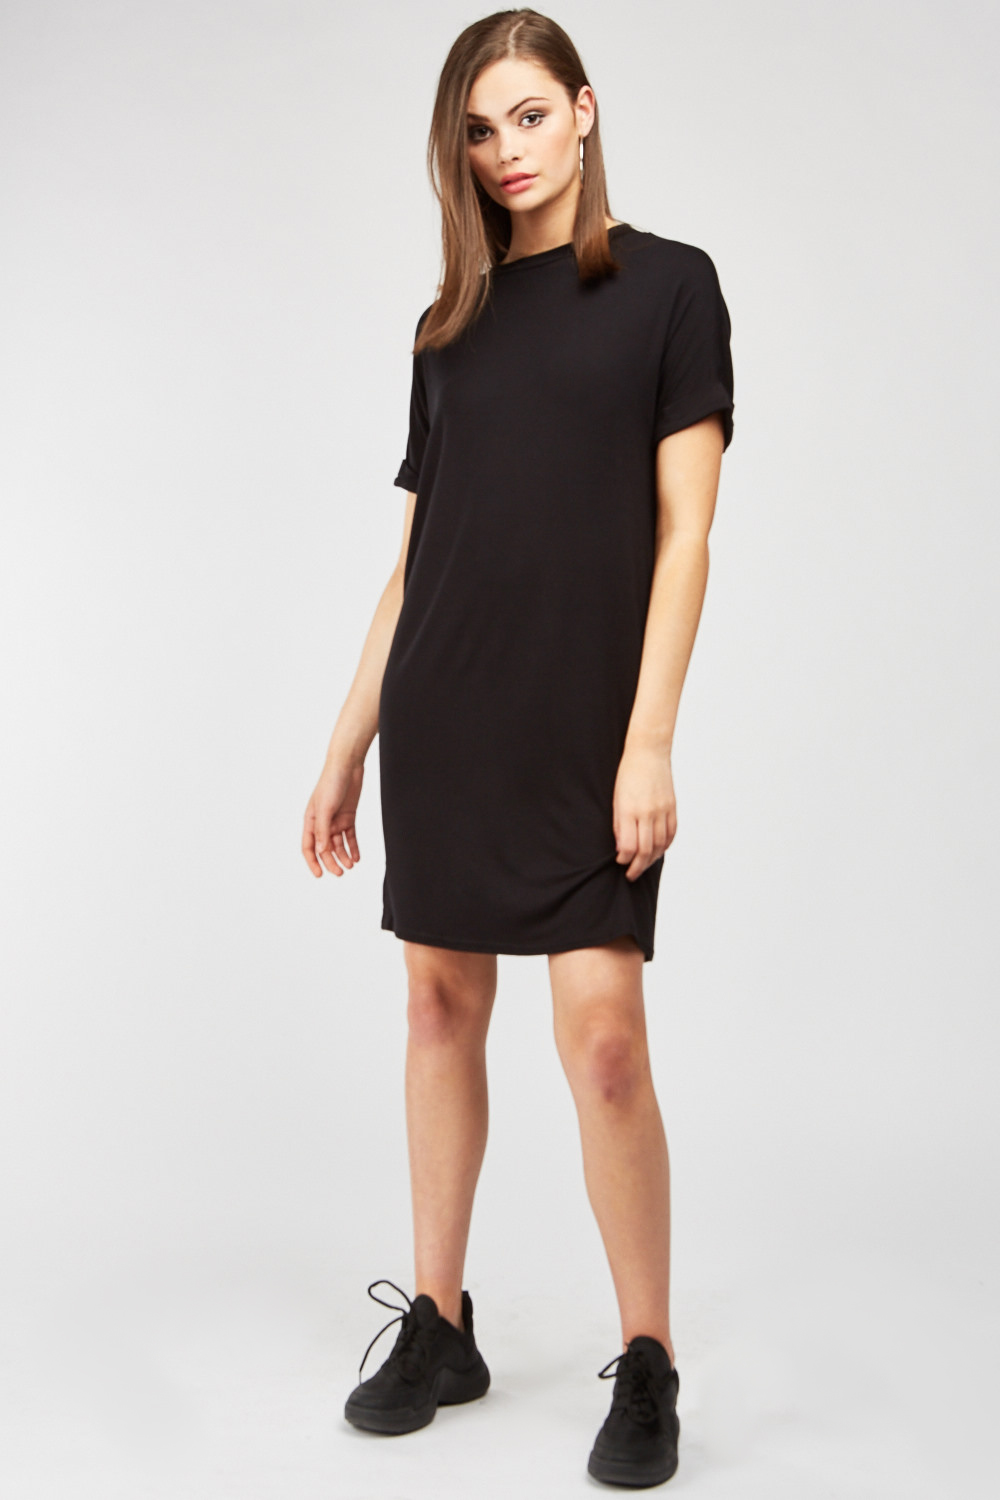 Plain Black Tshirt Dress on Sale, 52 ...